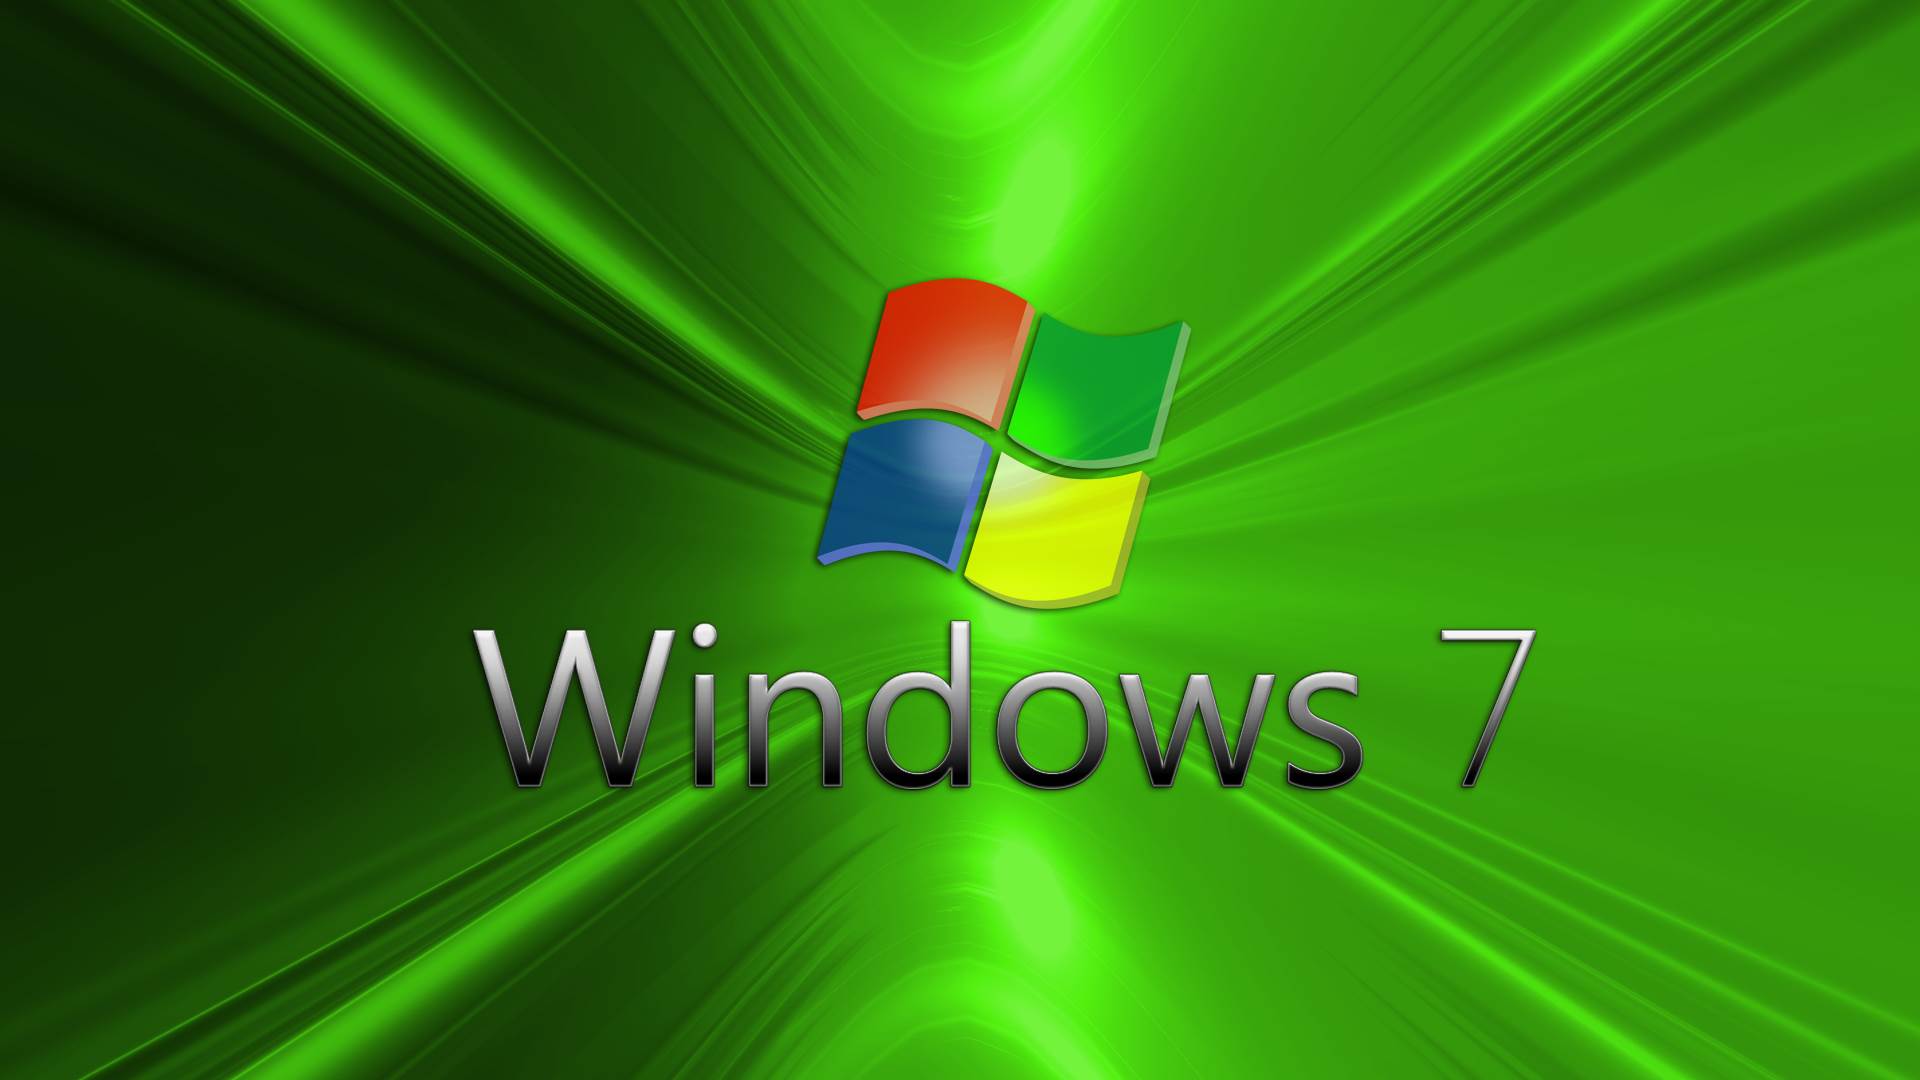 Windows 7 life. Картинки Windows 7. Windows 7 рабочий стол. Заставка Windows 7. Обои на рабочий стол виндовс 7.